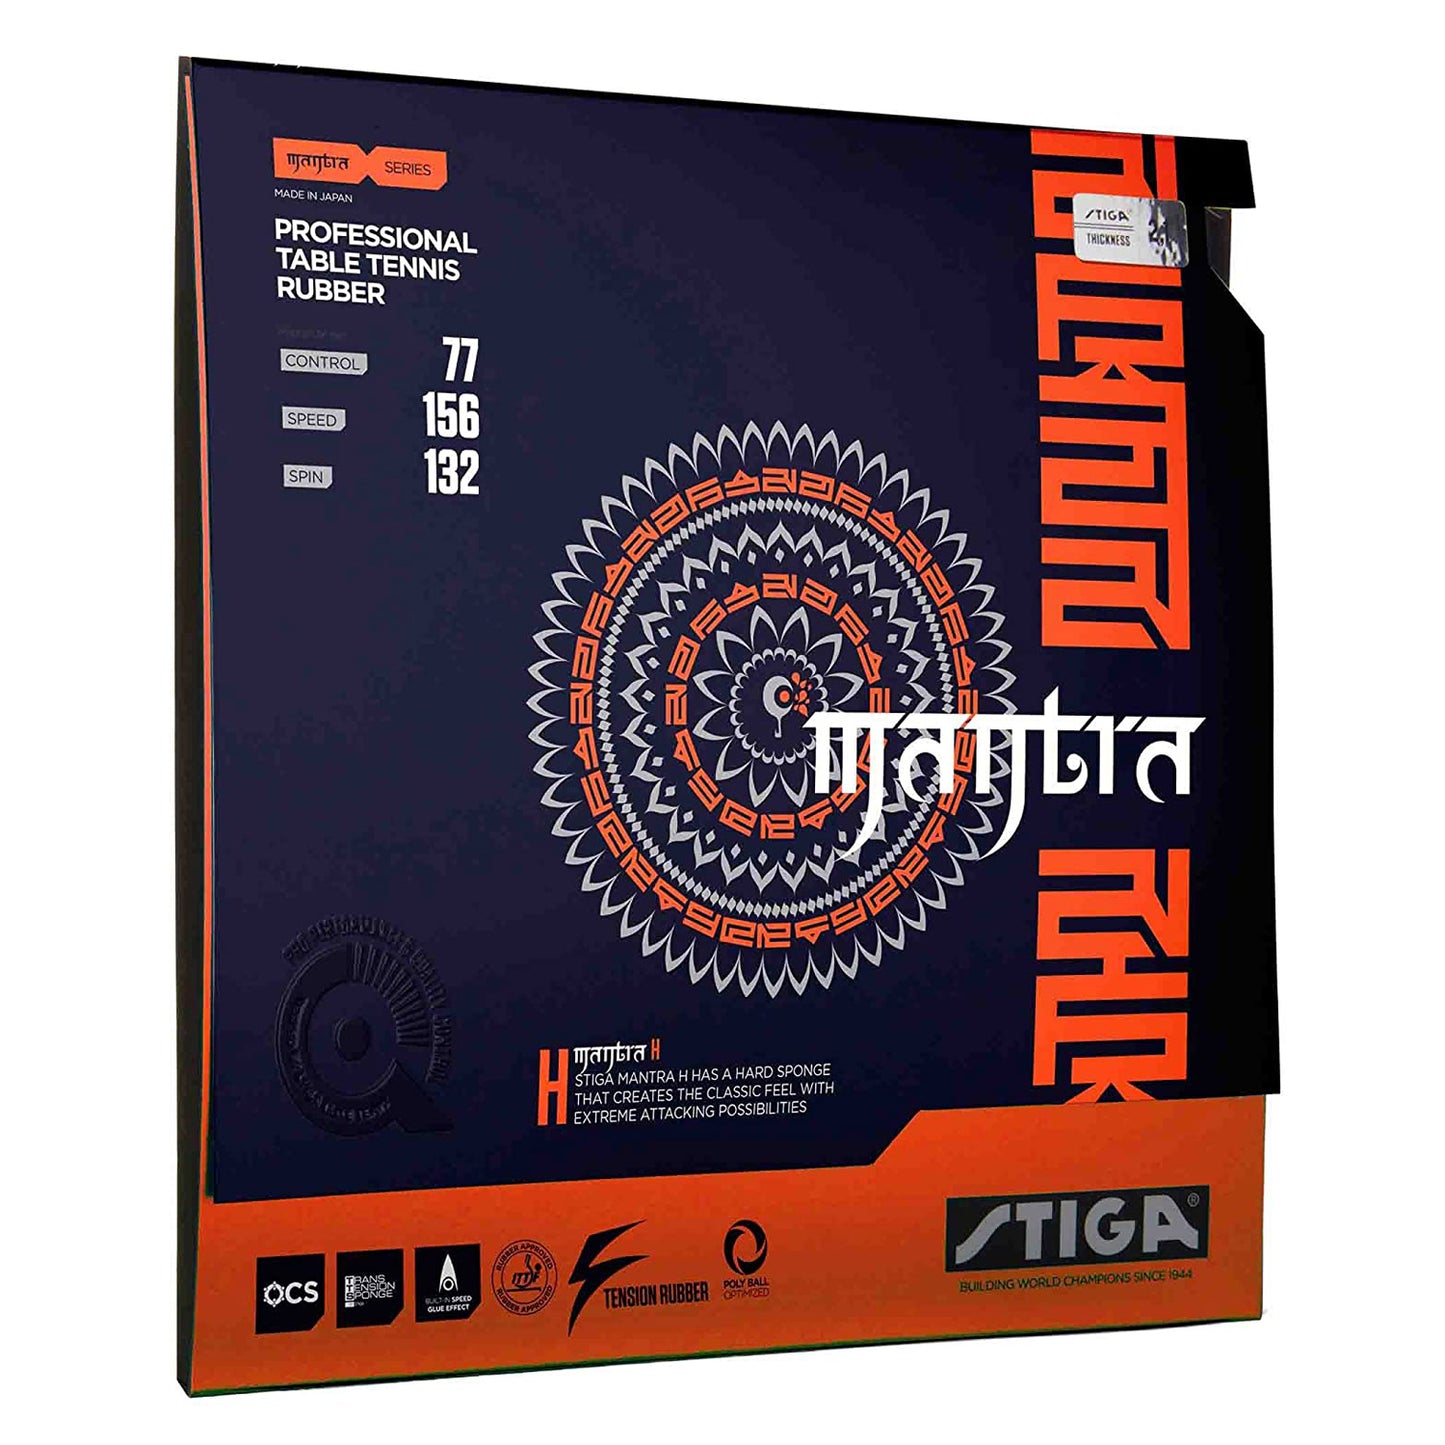 Stiga 32154 Mantra H Professional Table Tennis Rubber - Red - Best Price online Prokicksports.com